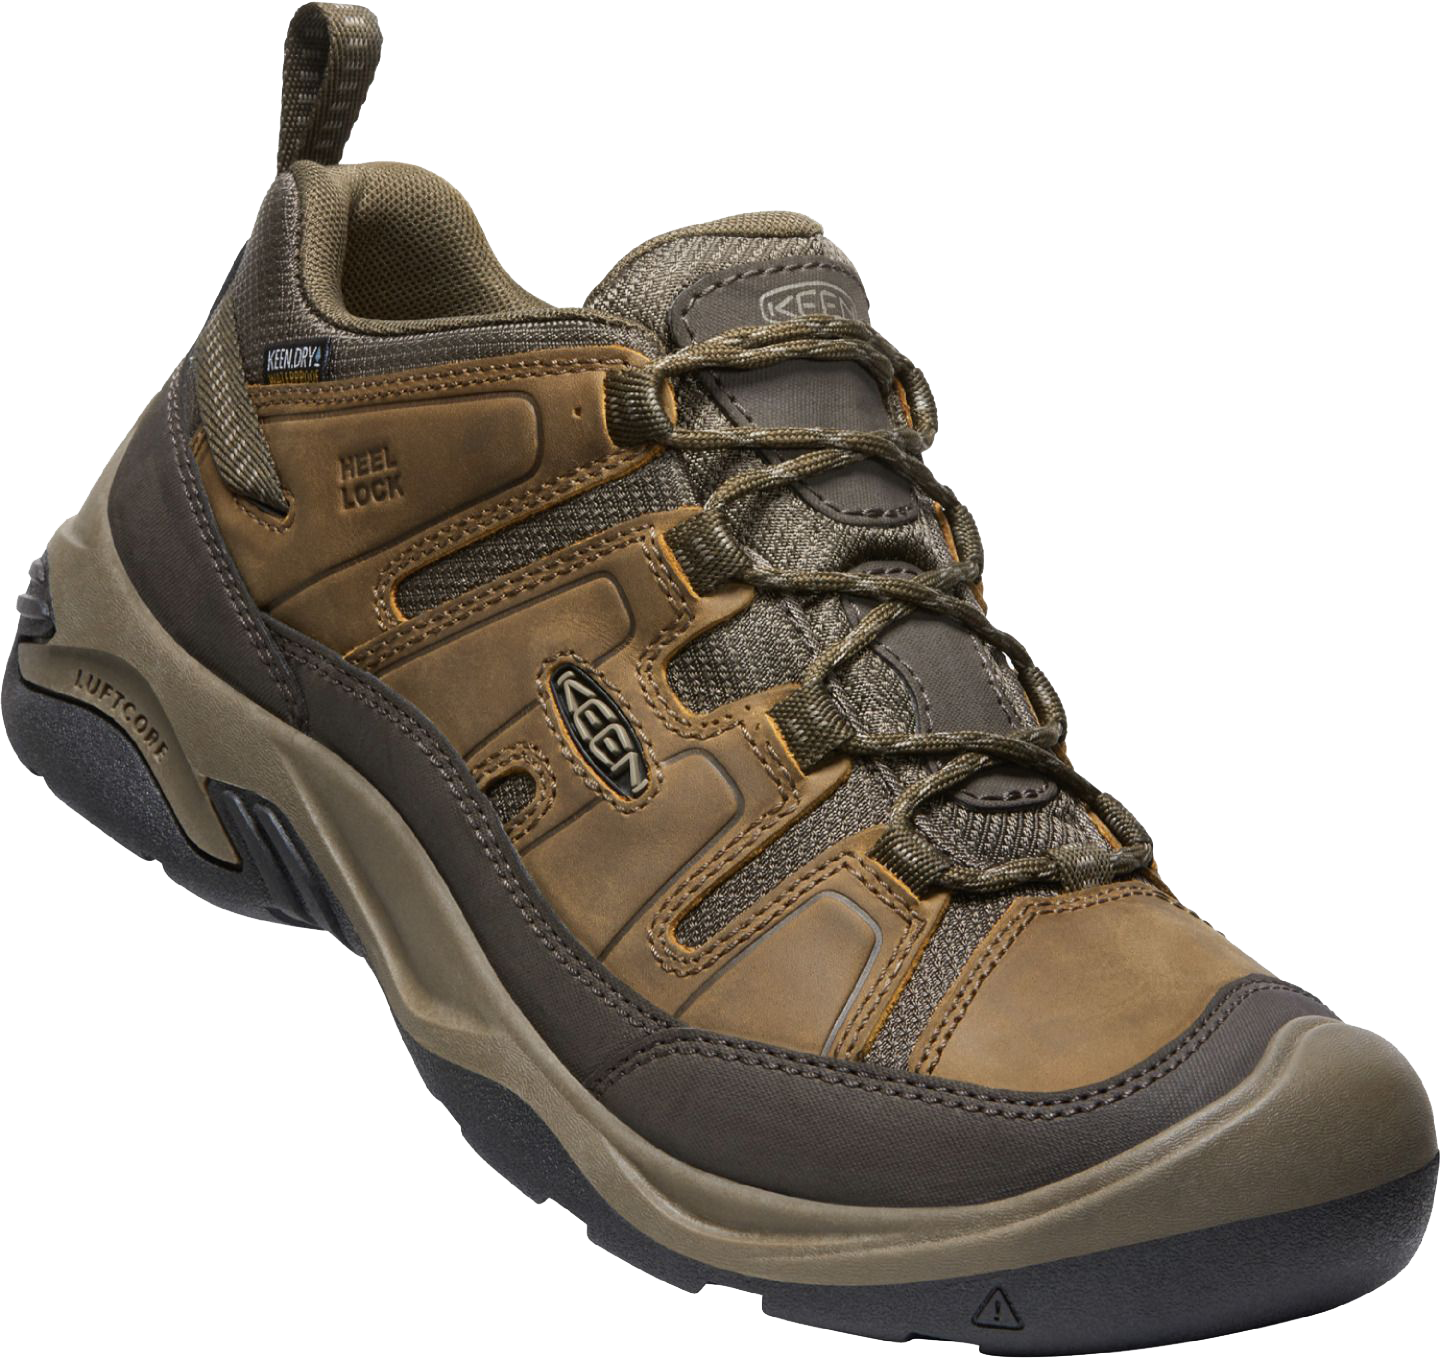 KEEN Circadia Low WP Waterproof Hiking Shoes for Men - Shitake/Brindle - 11.5W